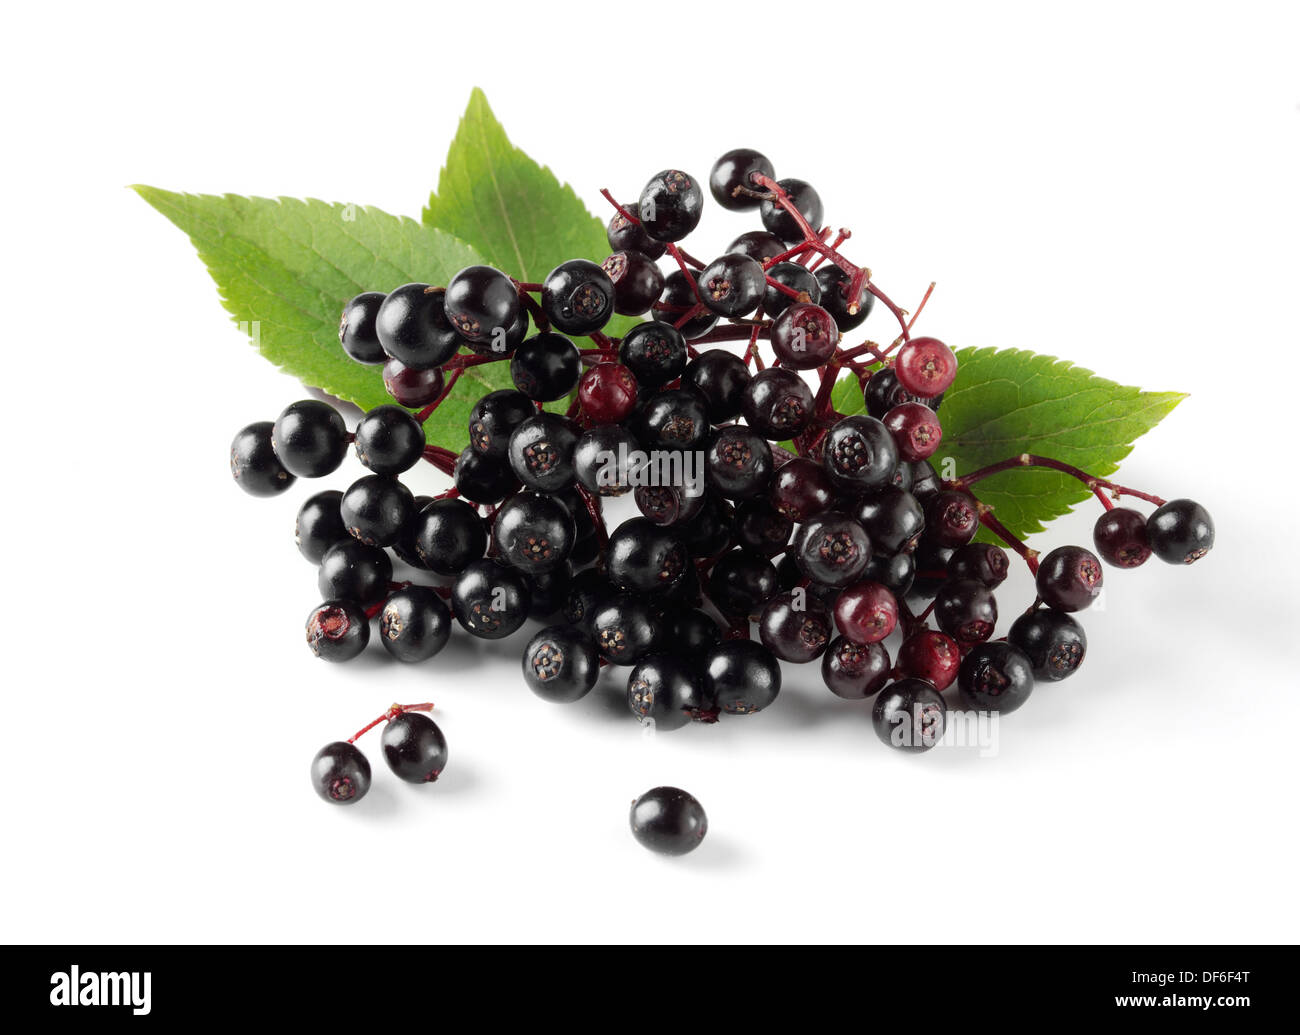 Fresh picked elder or elderberry berries fruit with leaves (Sambucus) against a white background Stock Photo